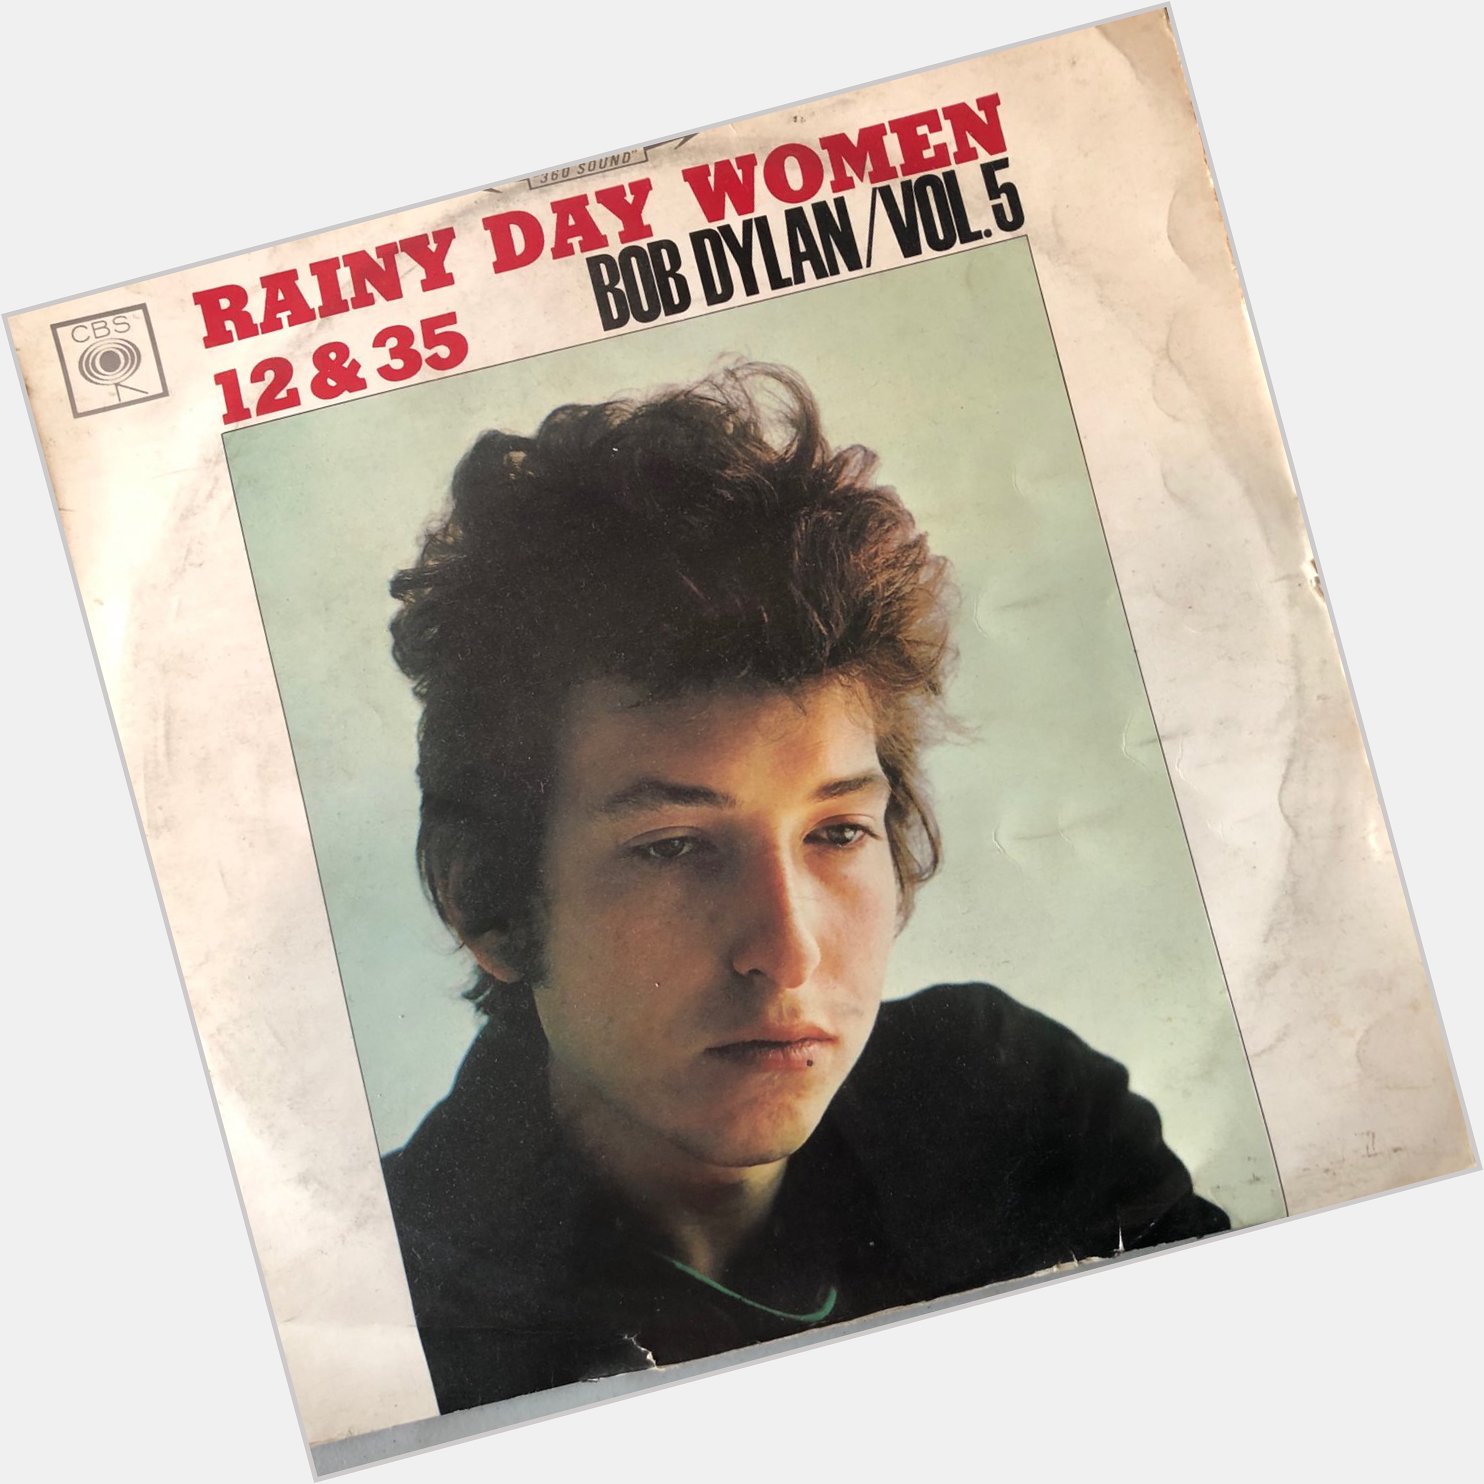 Happy 78th birthday to Bob Dylan! 